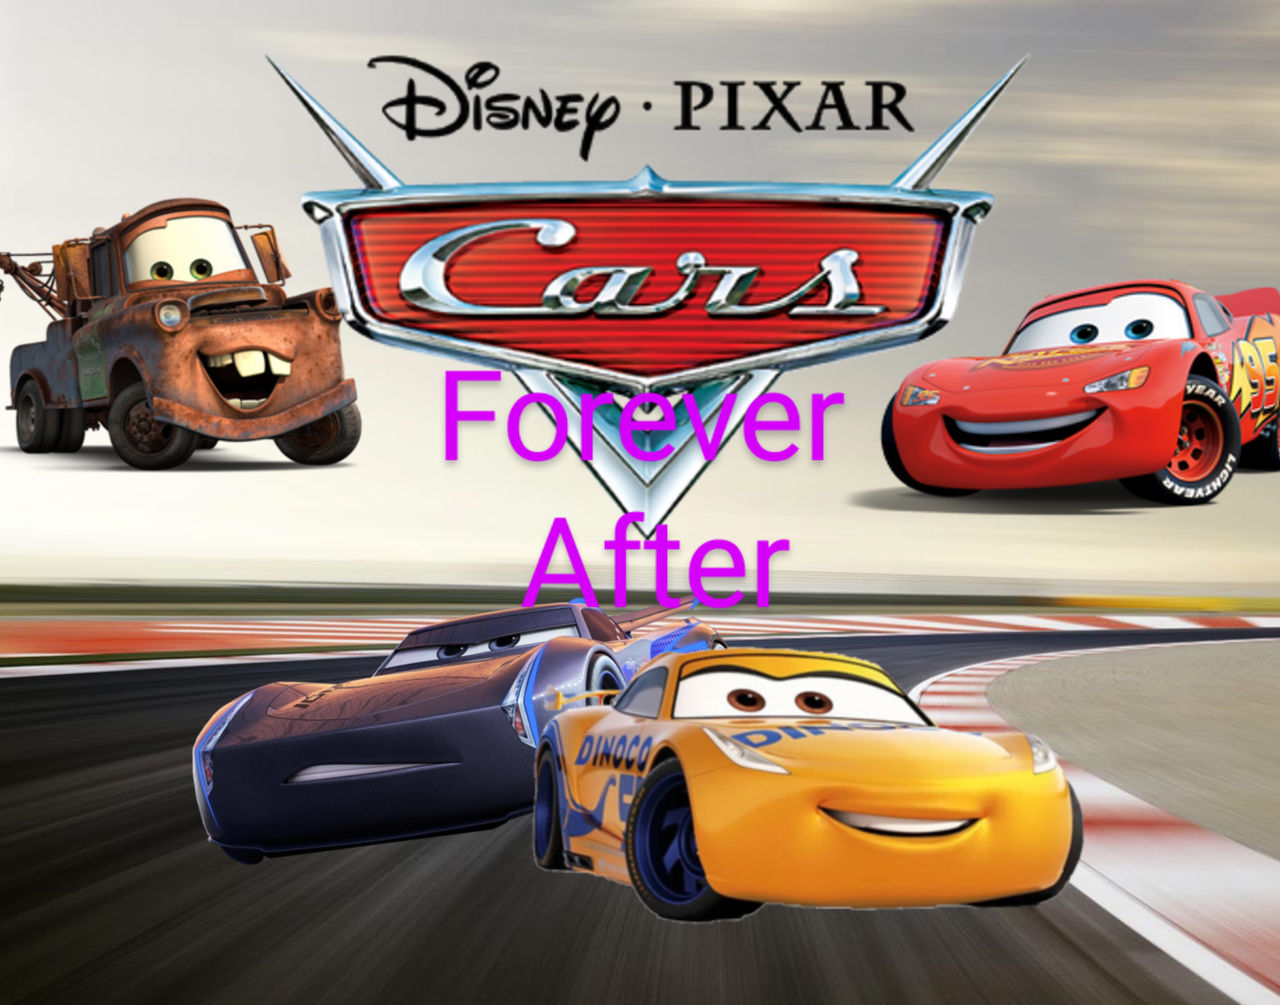 Pixar's Cars (@pixarcars) • Instagram photos and videos